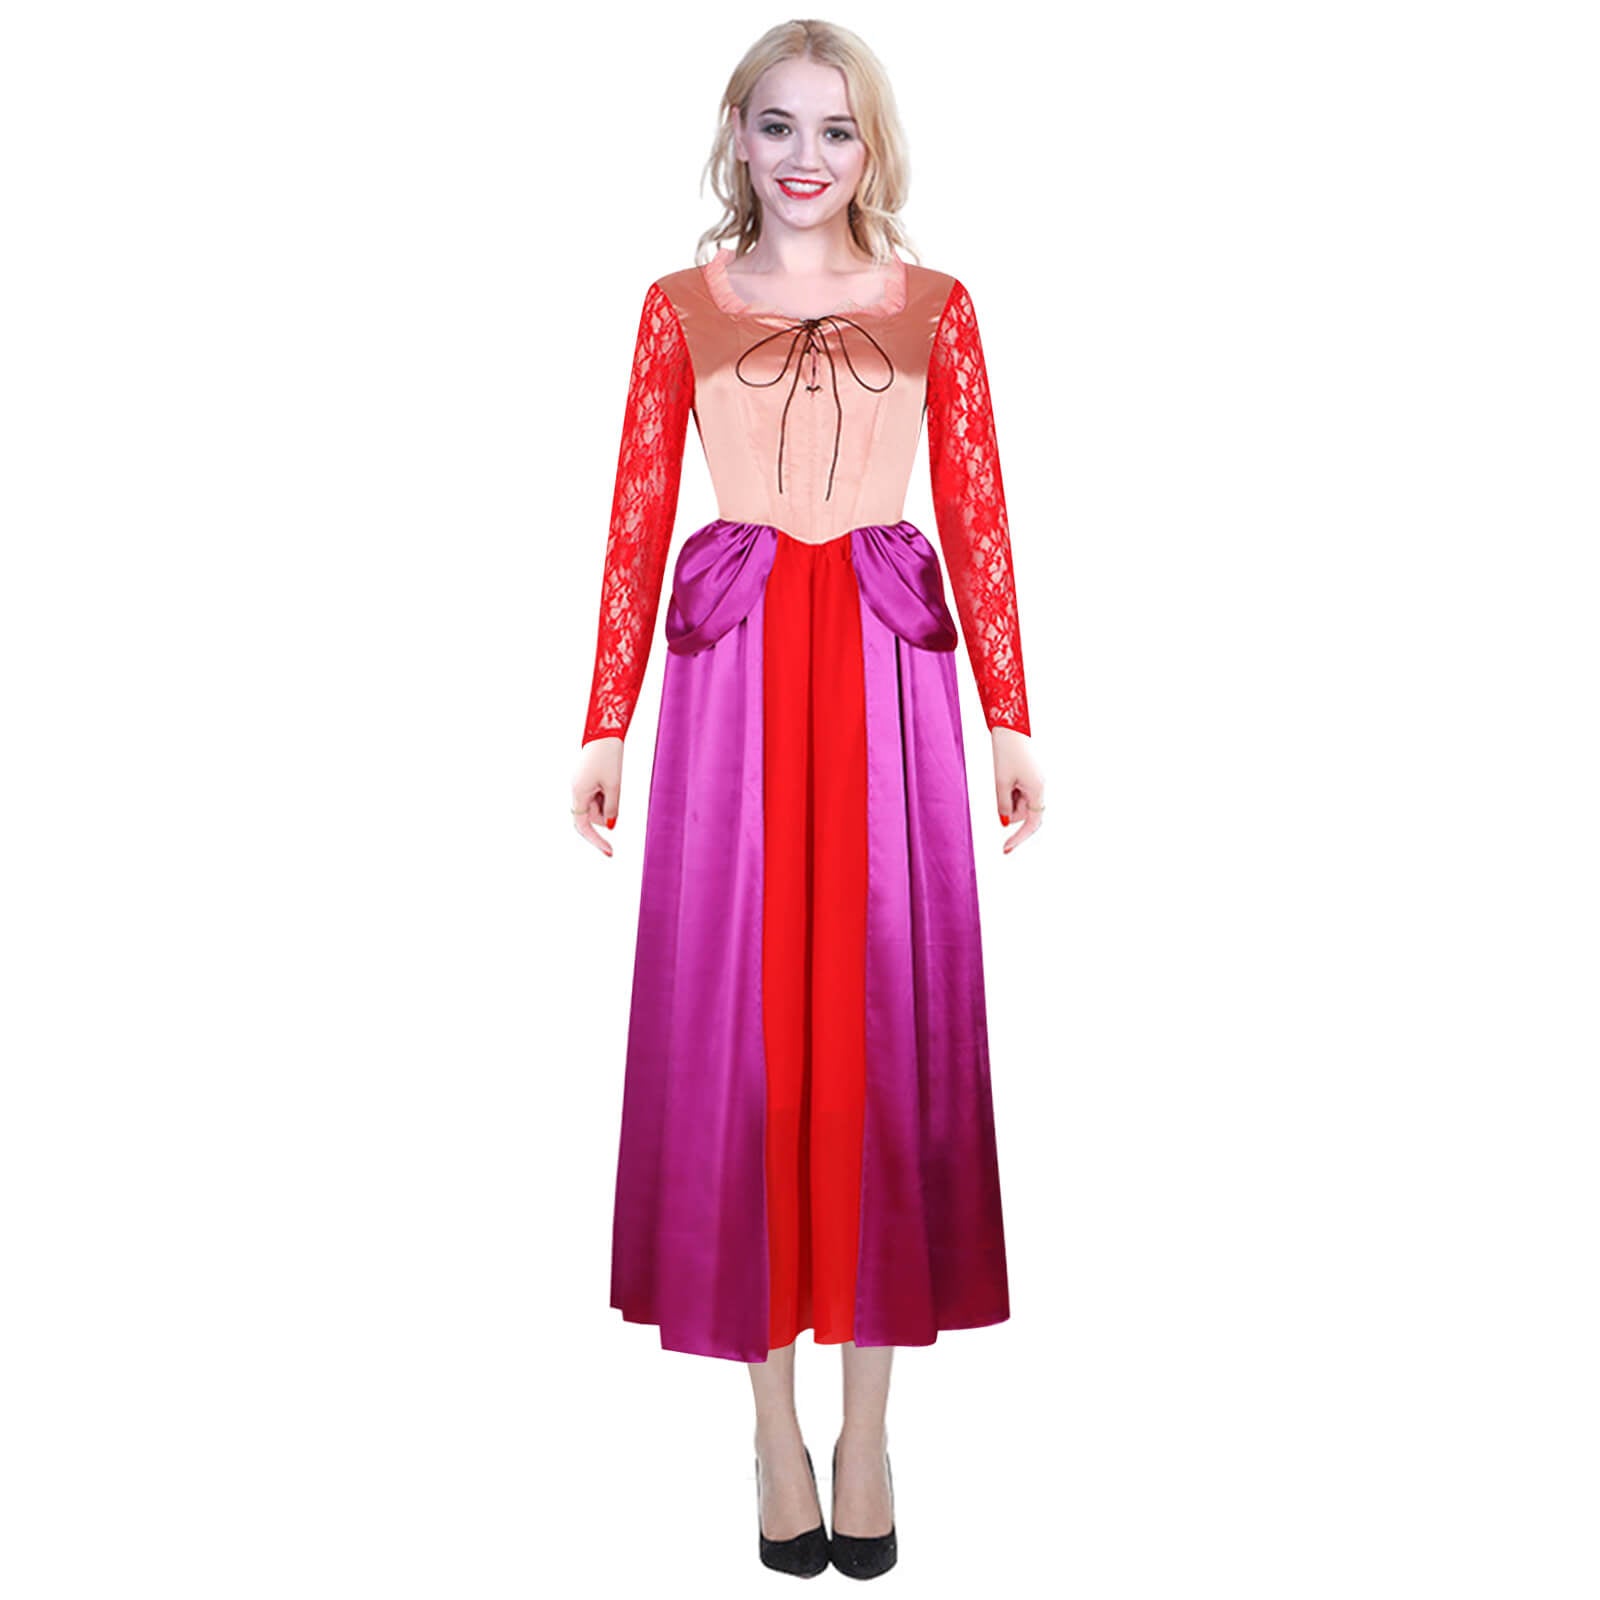 Adult Sarah Sanderson Costume Halloween Cosplay Costume Long Sleeve Elegant Satin Dress